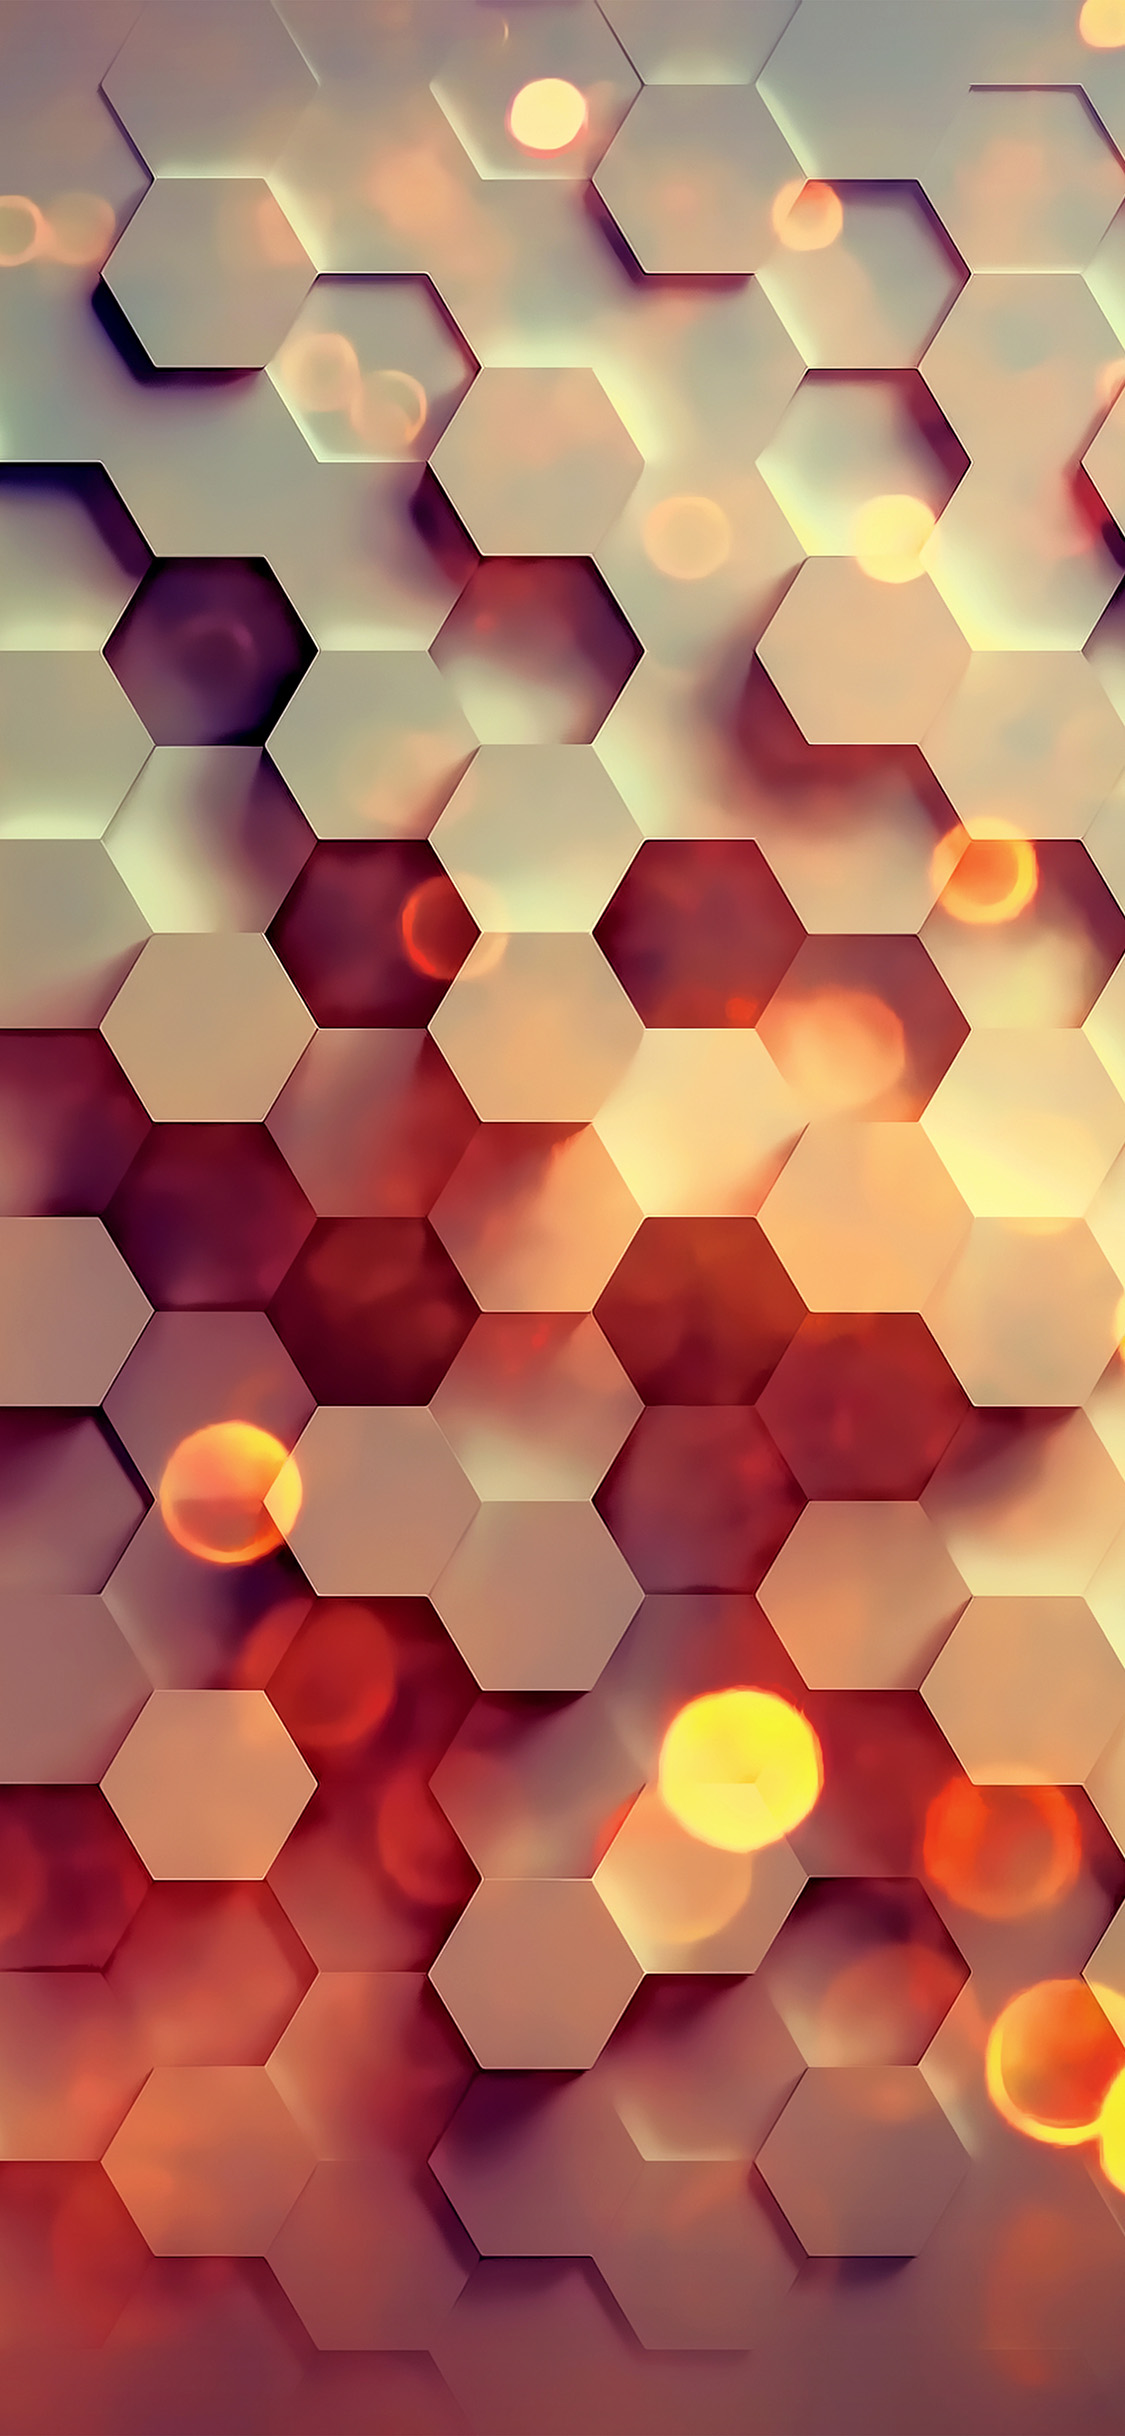 vy40-honey-hexagon-digital-abstract-pattern-background-wallpaper